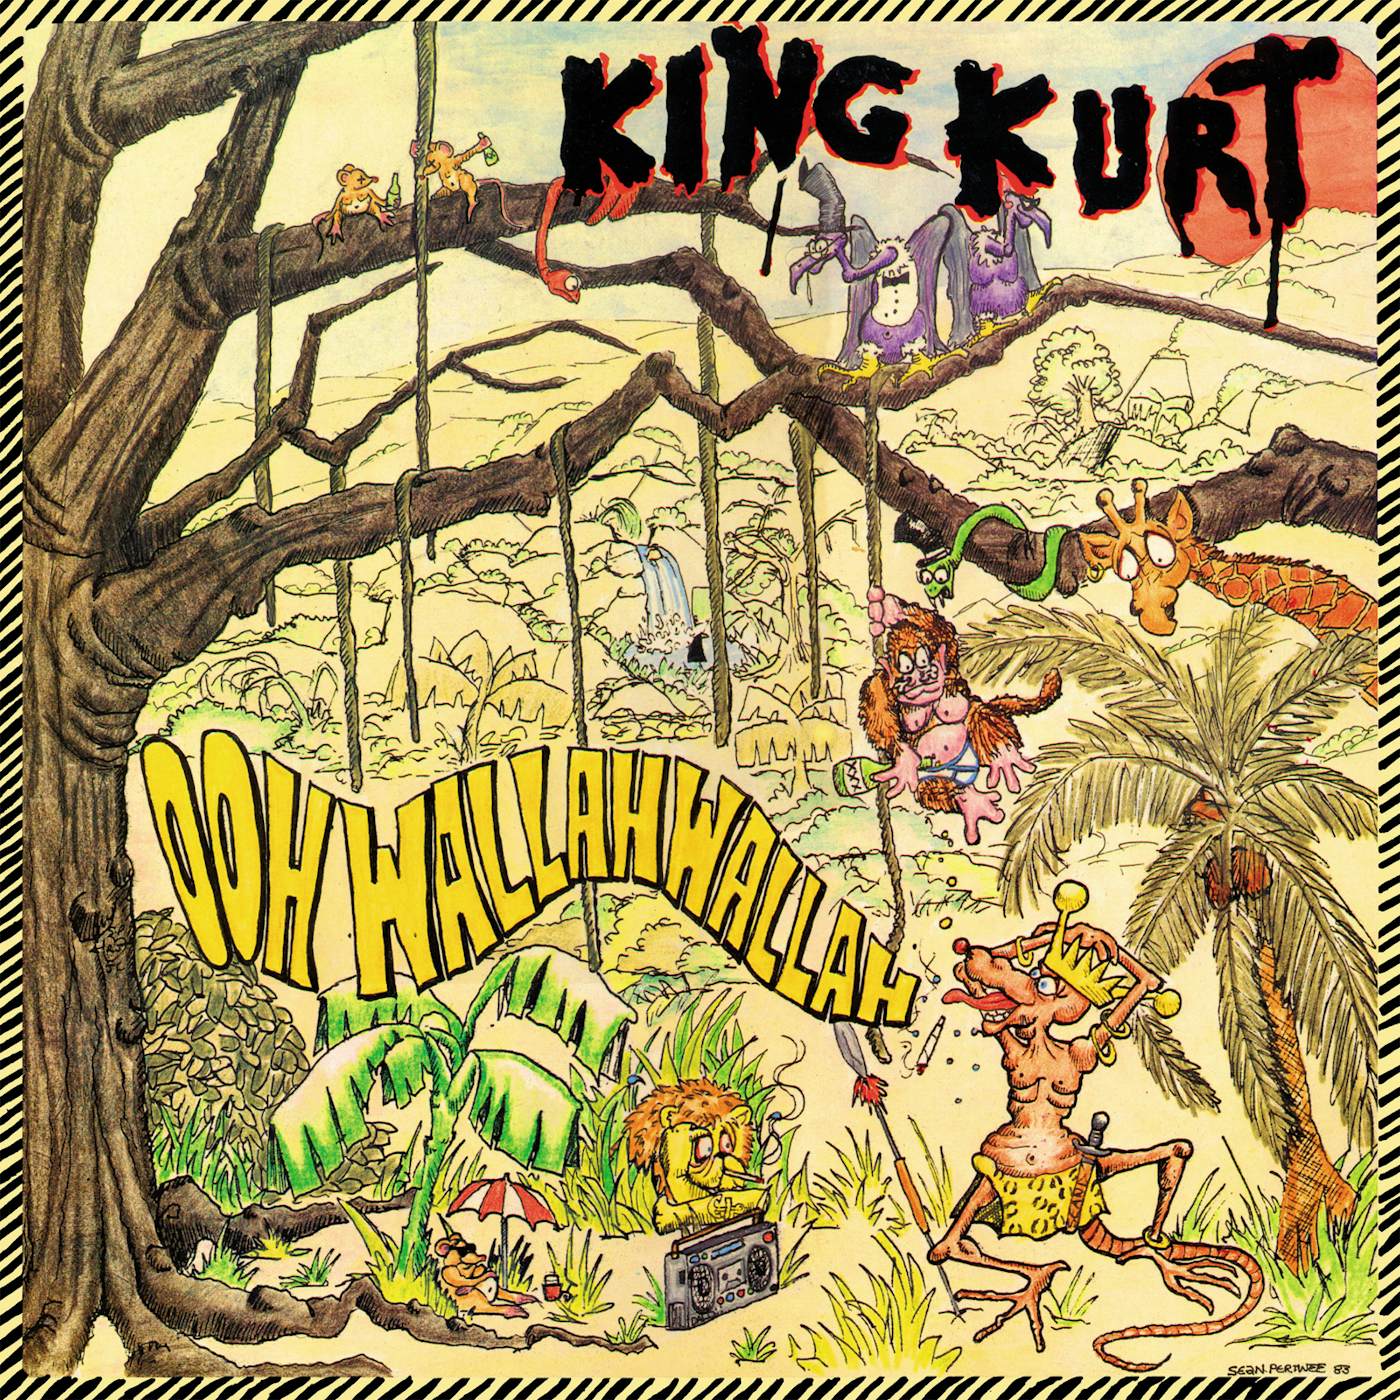 King Kurt OOH WALLAH WALLAH: 35TH ANNIVERSARY Vinyl Record